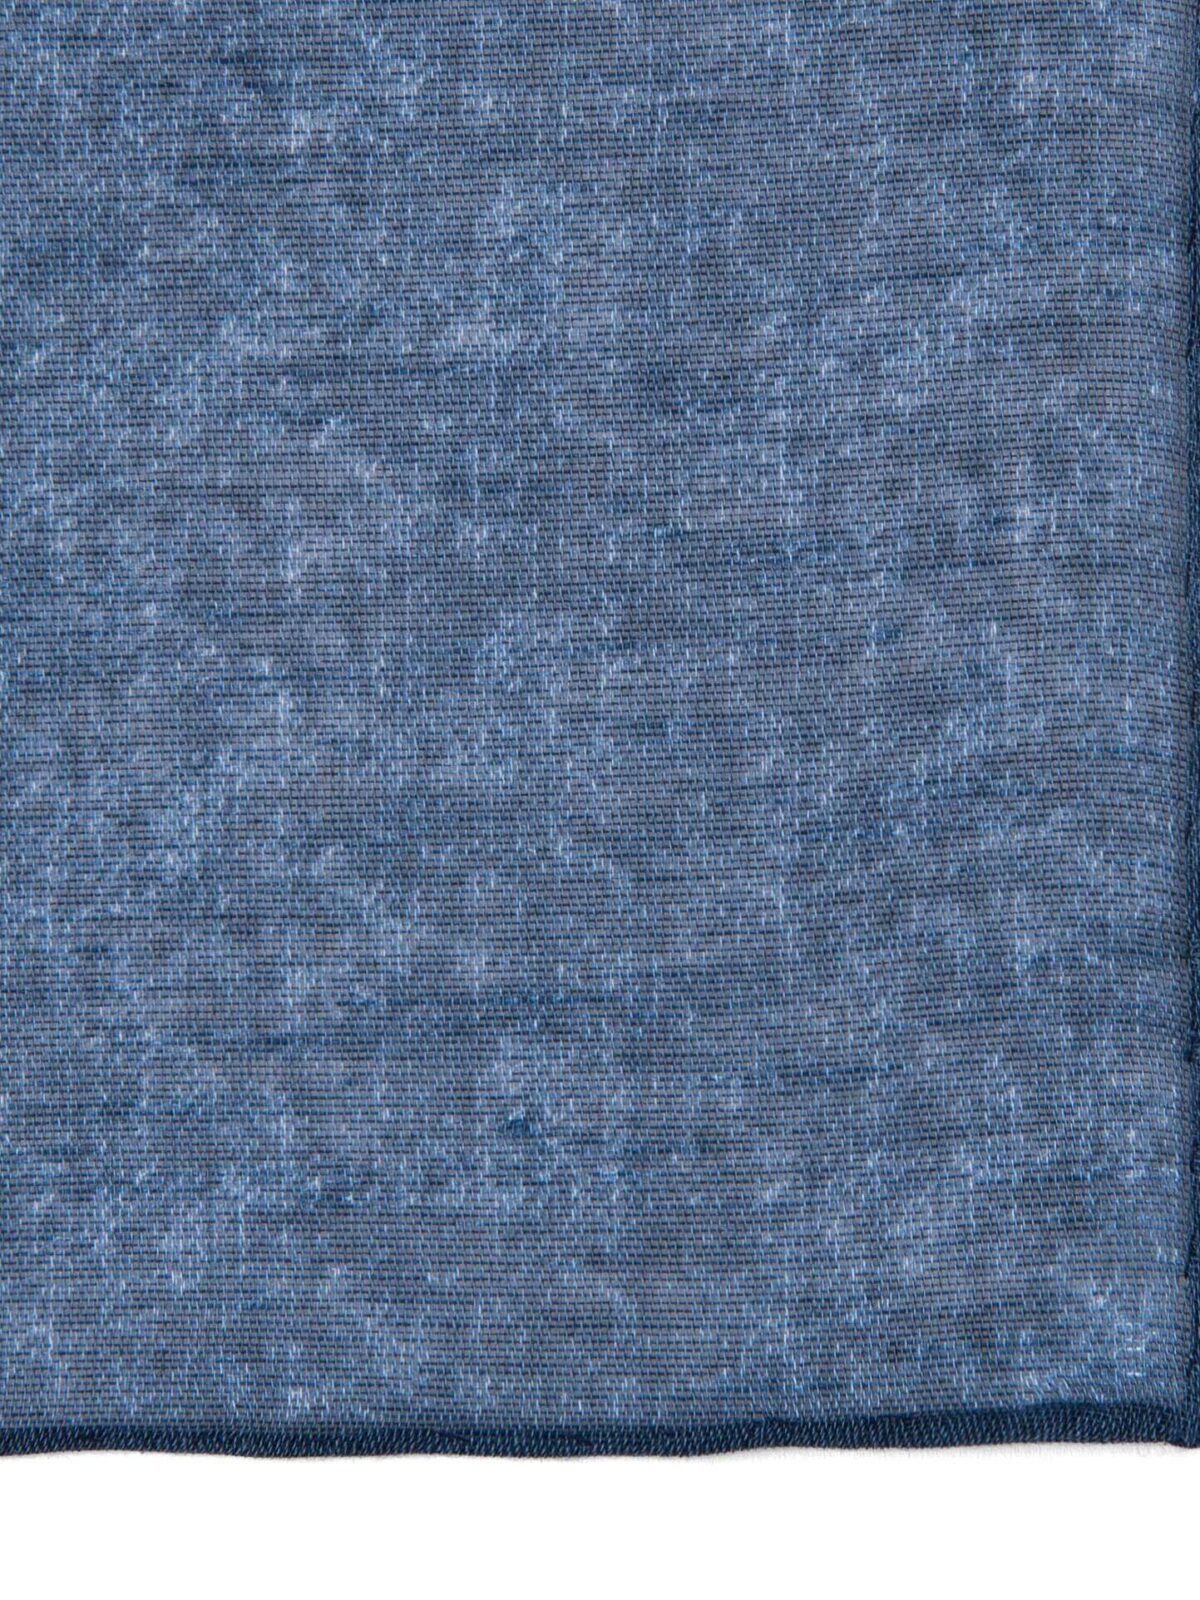 Navy Cotton Linen Pocket Square